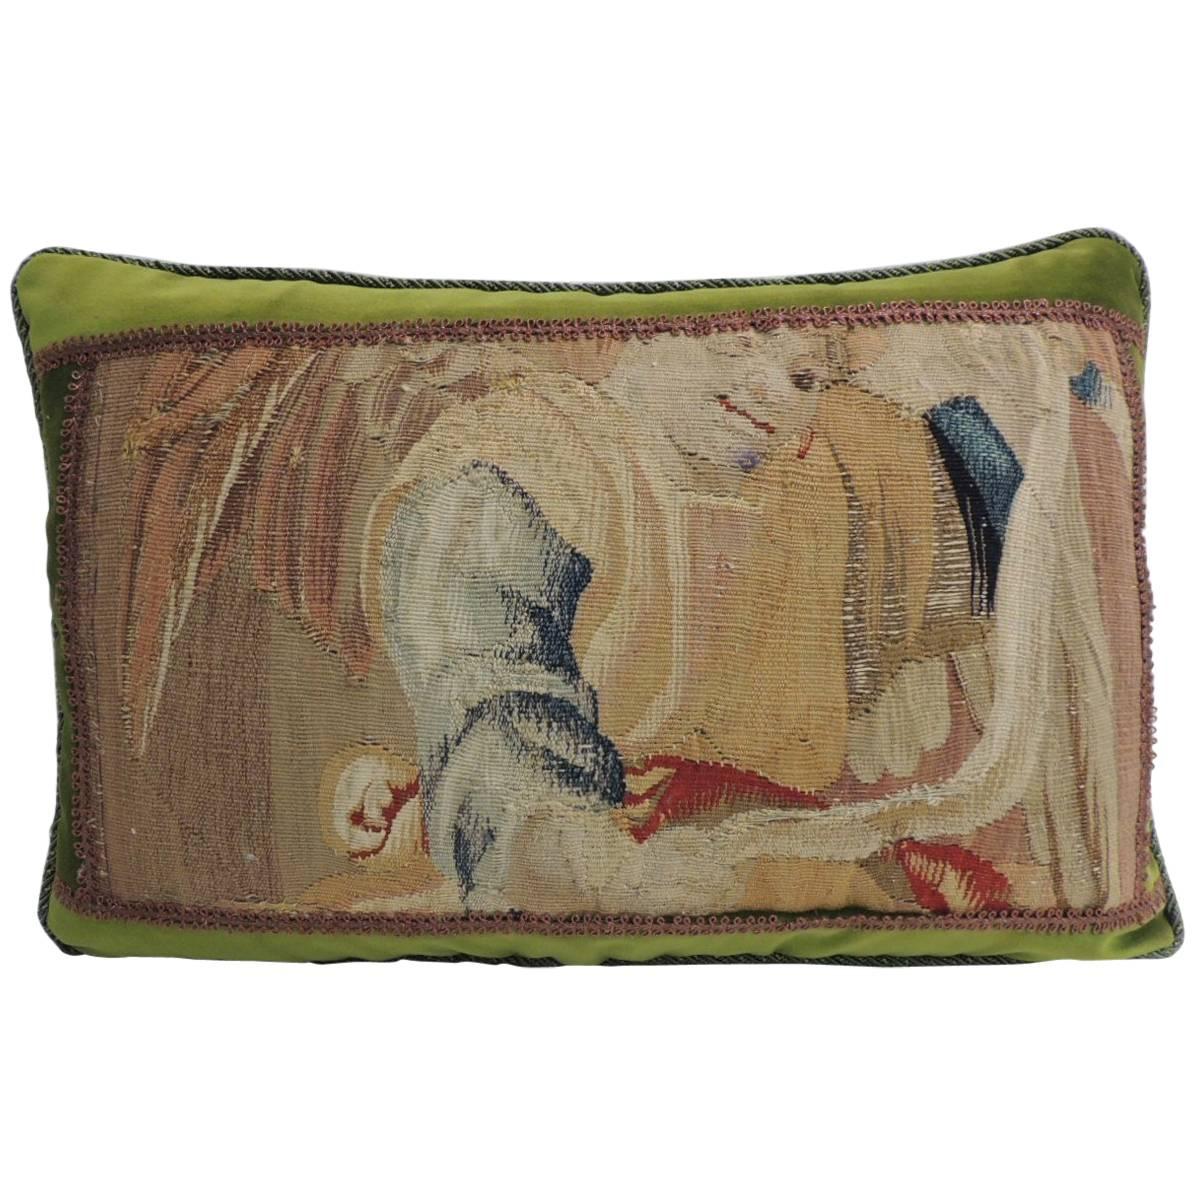 18th Century Aubusson Tapestry Decorative Lumbar Pillow